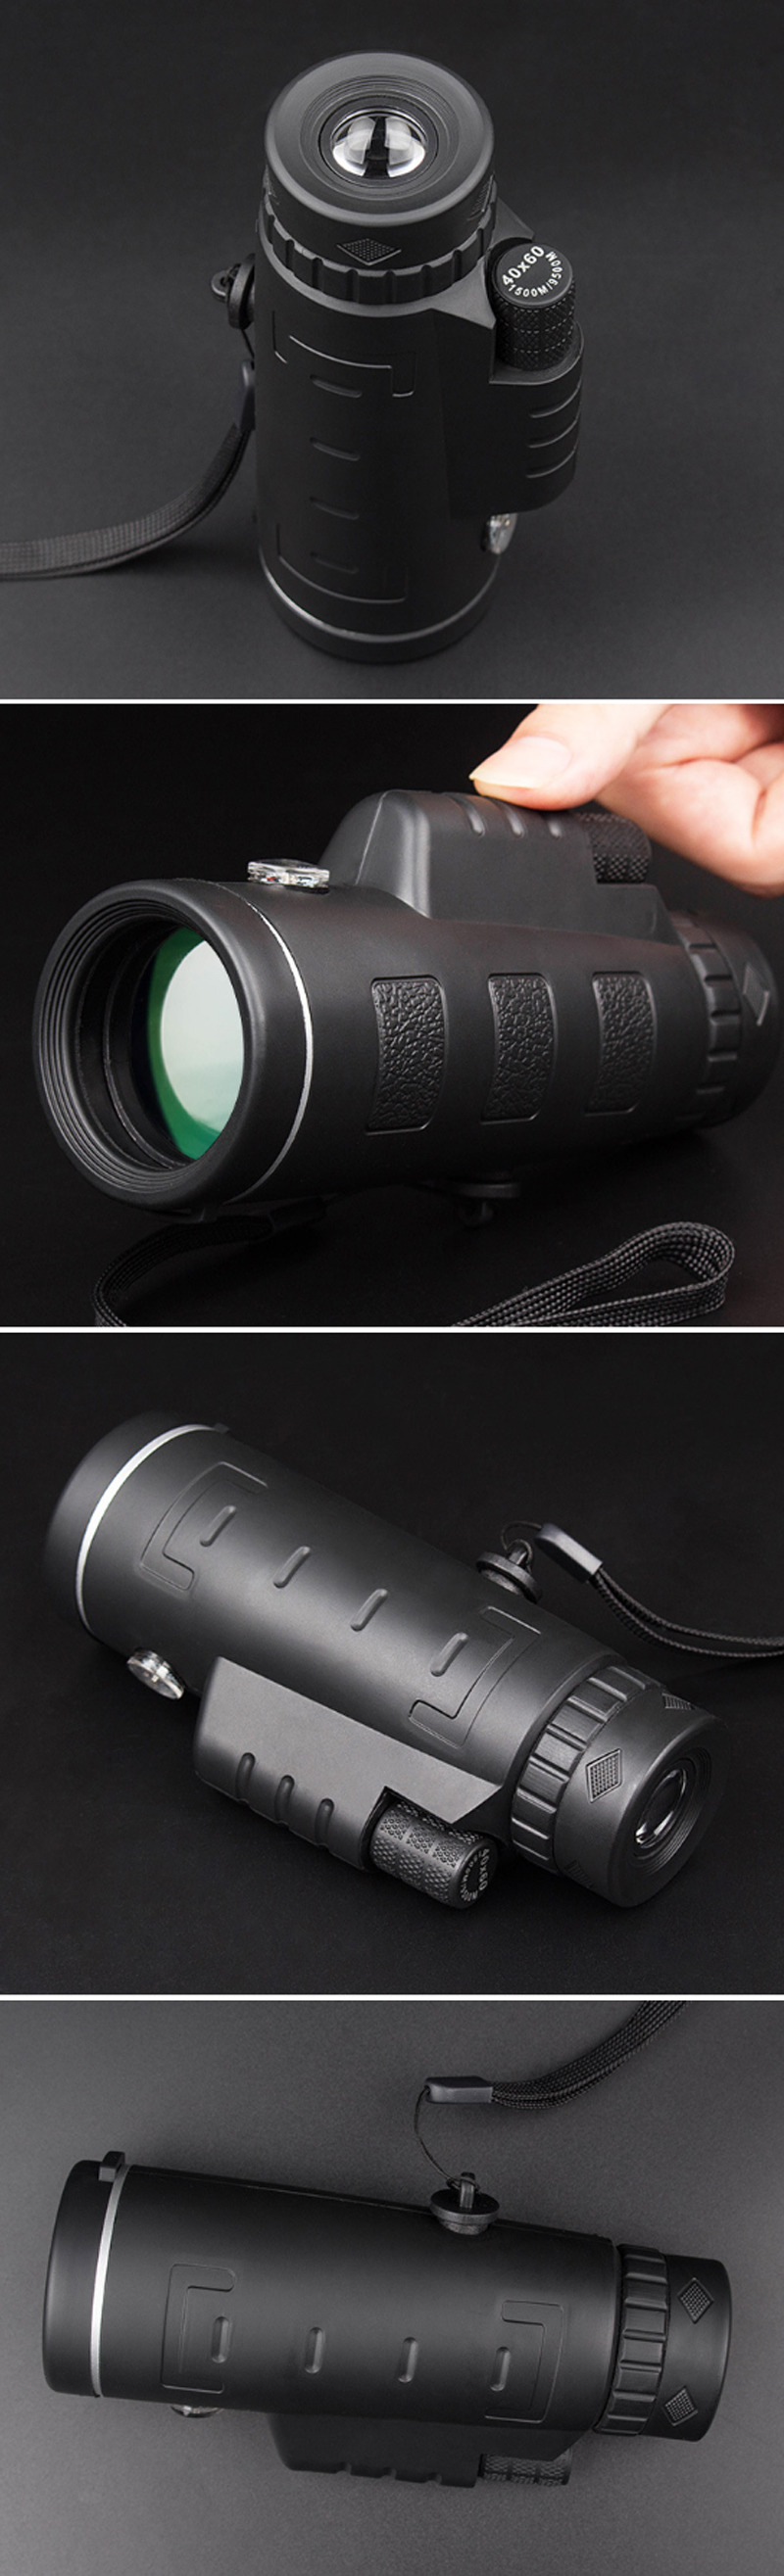 IPReereg-40X60-Upgraded-Outdoor-Monocular-With-Compass-HD-Optic-Low-Light-Level-Night-Vision-Telesco-1428936-3